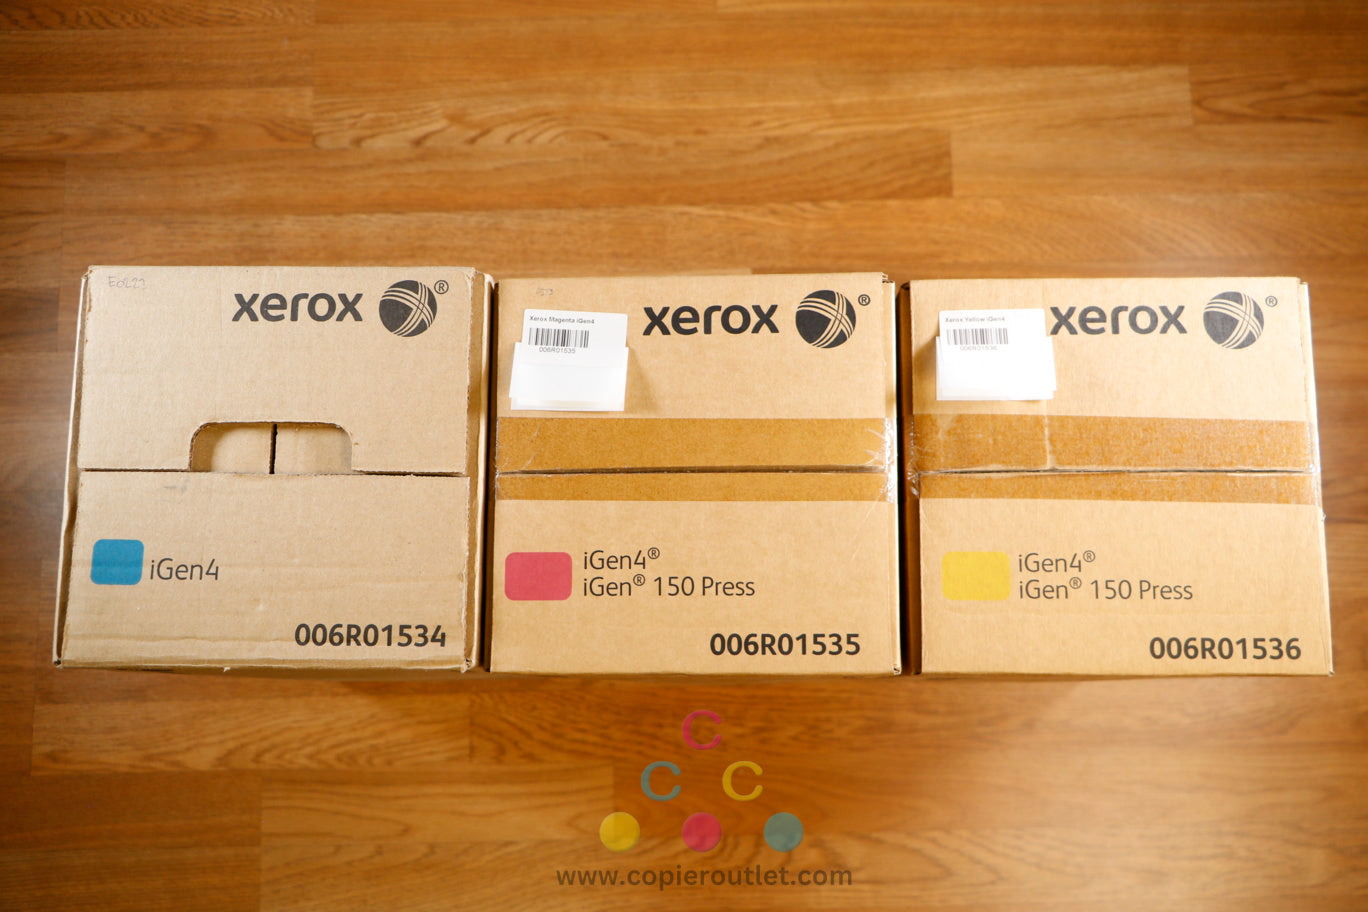 NEW Genuine Xerox 006R01534,35,36 CMY Matte Dry Ink Toners for Xerox iGen4 iGen150